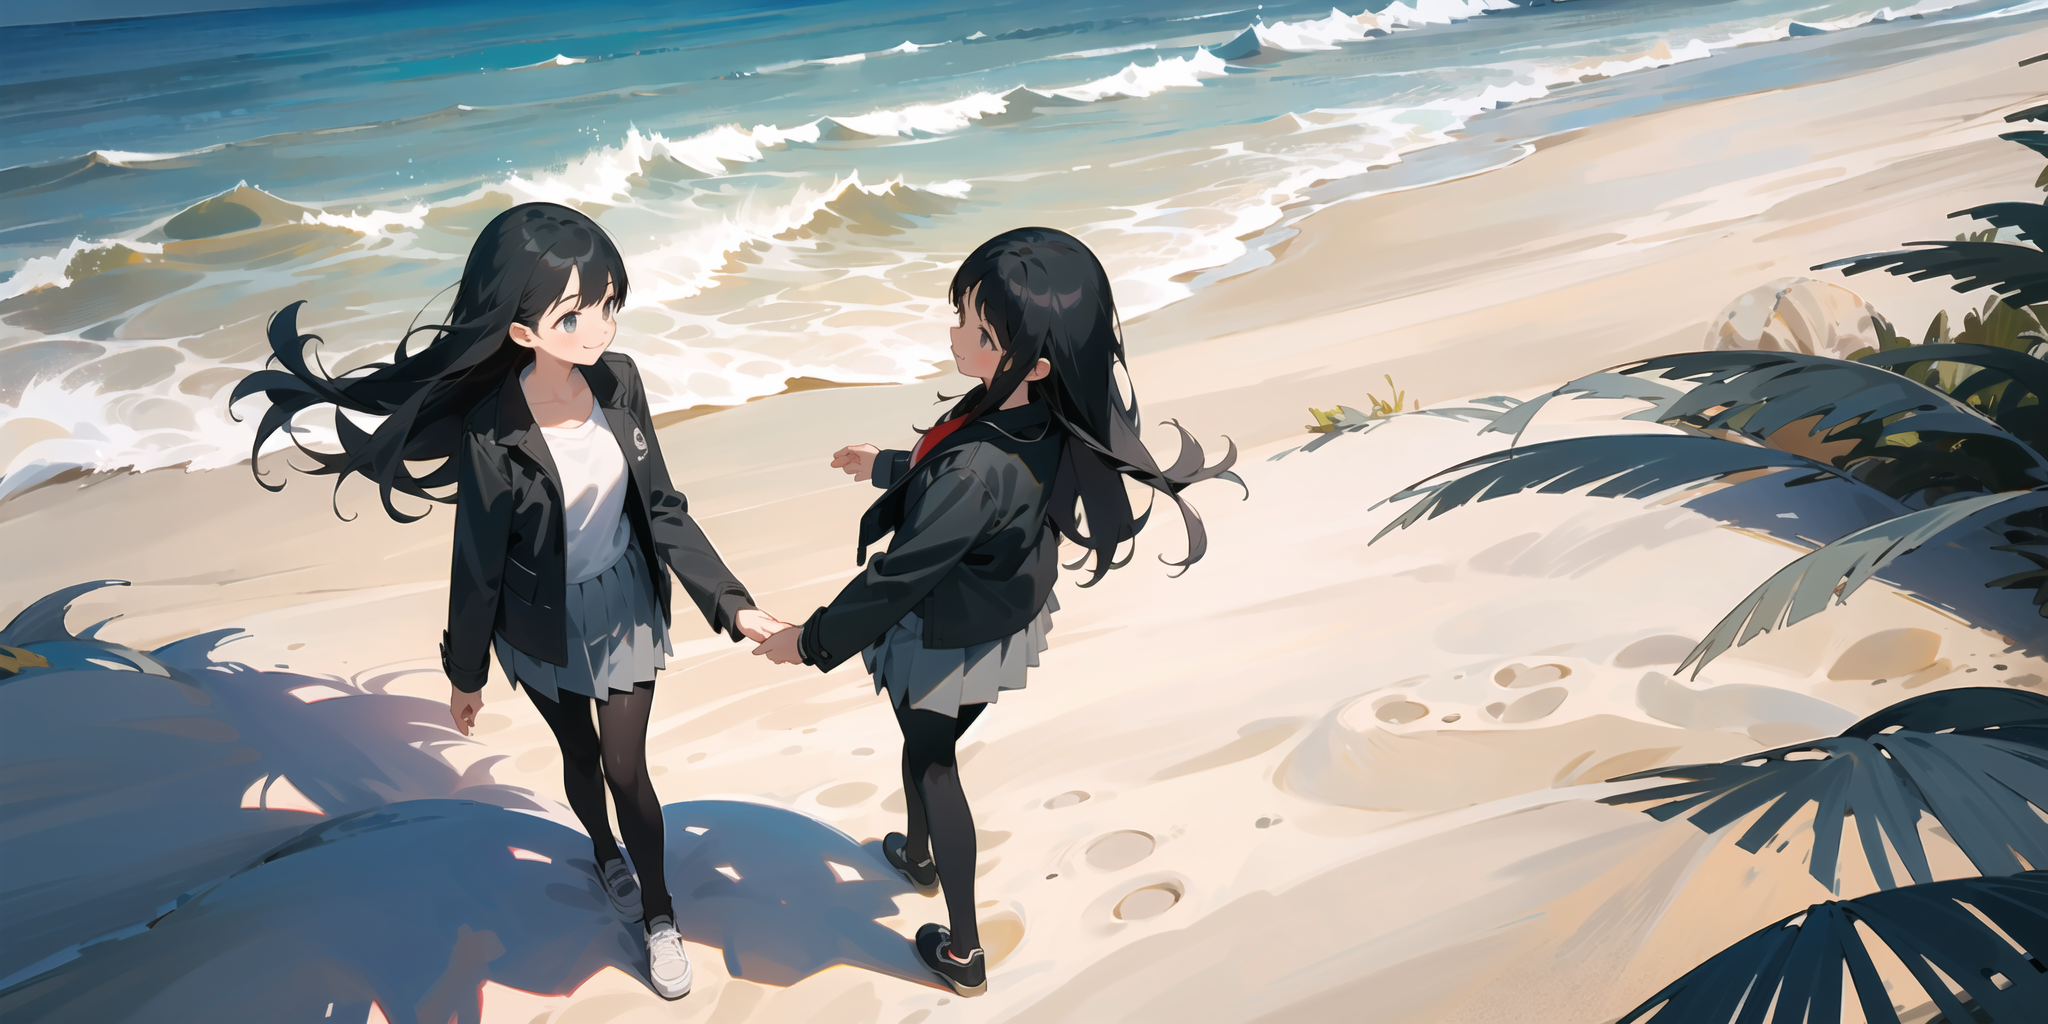 (masterpiece, best quality), (from above:1.4), 2girls walking along a beach together, multiple girls,sun light, long hair,...